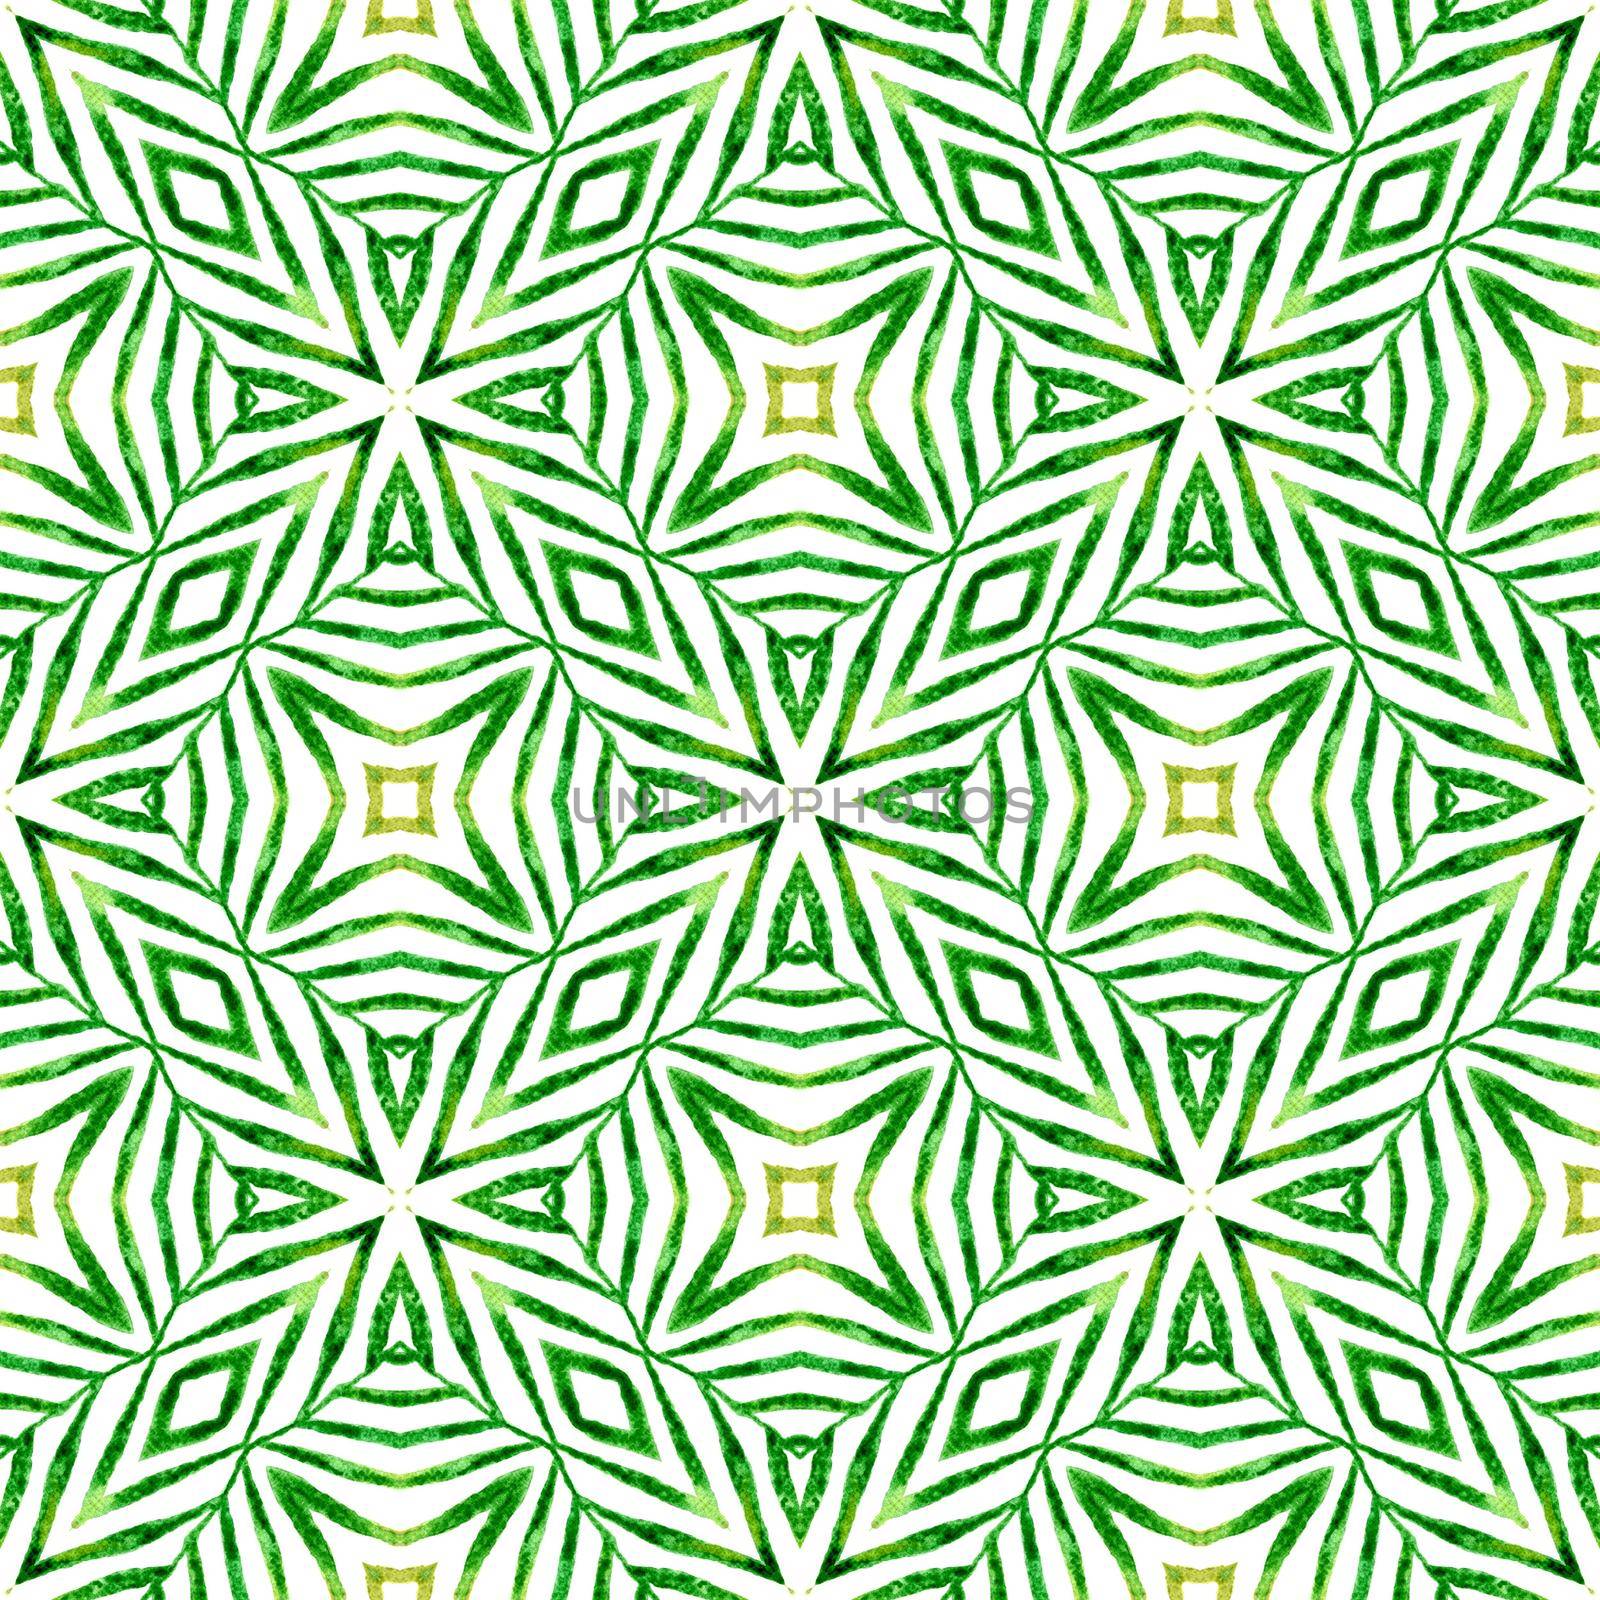 Textile ready astonishing print, swimwear fabric, wallpaper, wrapping. Green unusual boho chic summer design. Repeating striped hand drawn border. Striped hand drawn design.